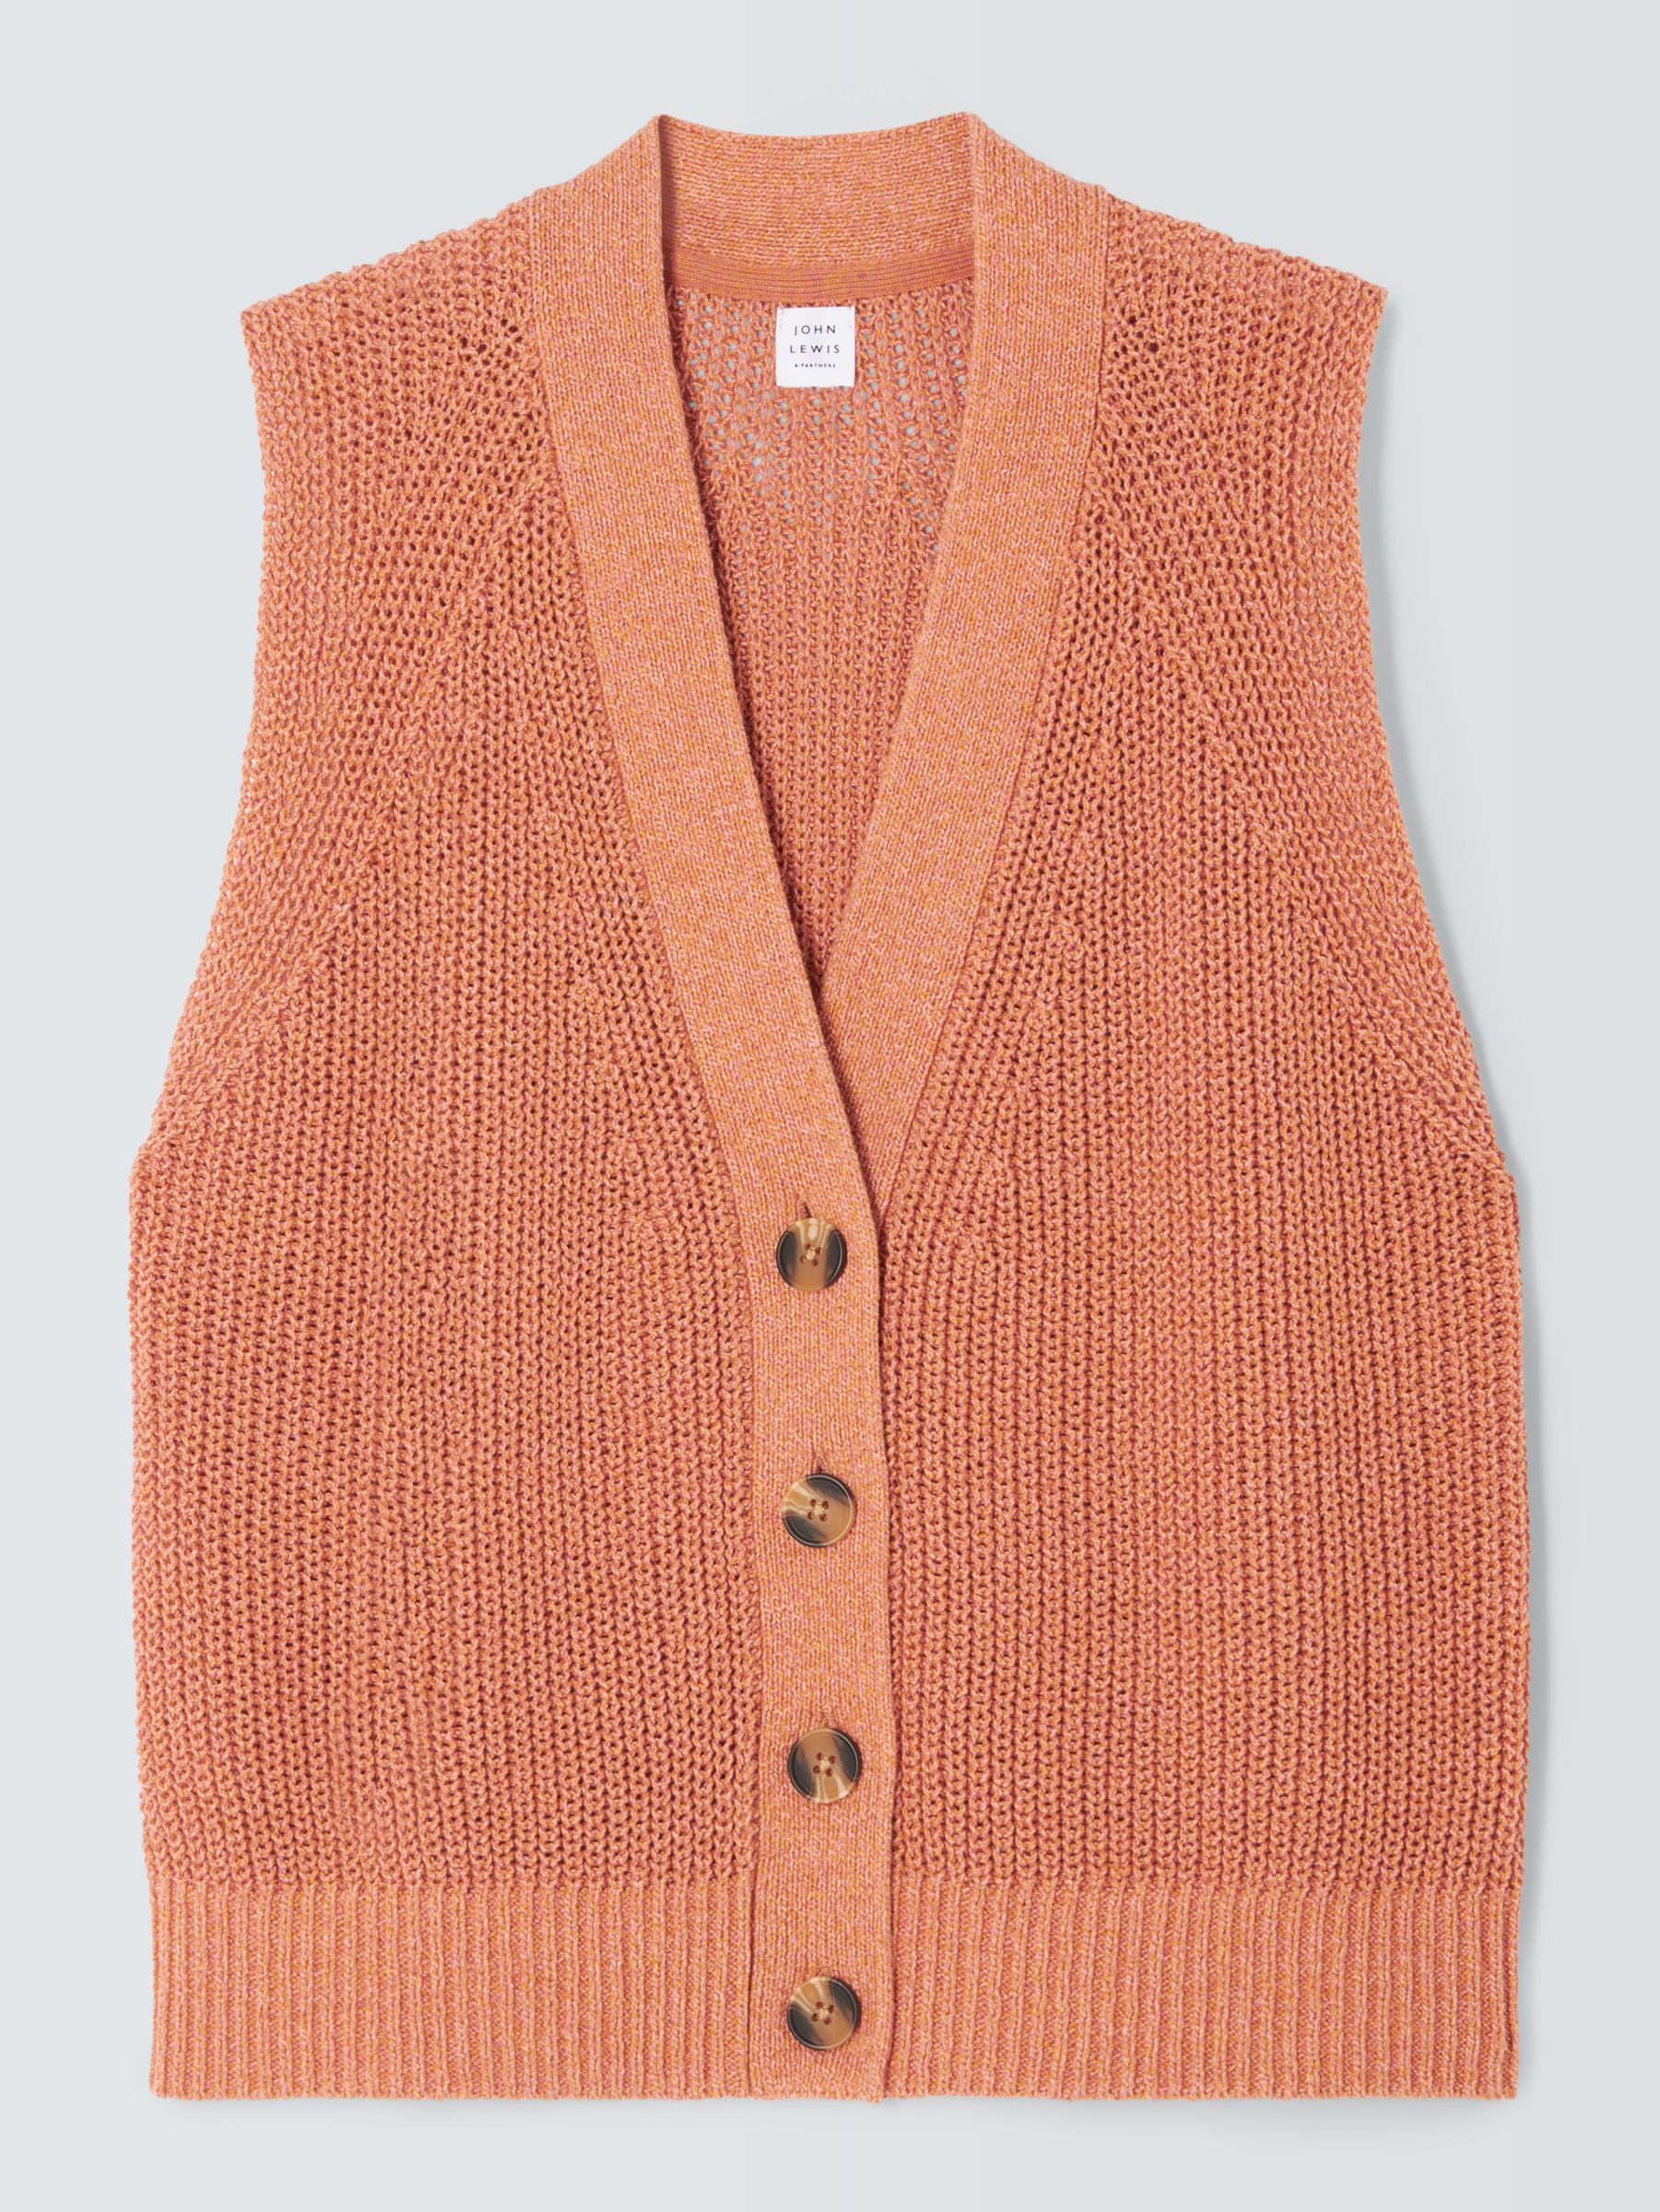 Buy John Lewis Sleeveless Knitted Waistcoat Online at johnlewis.com